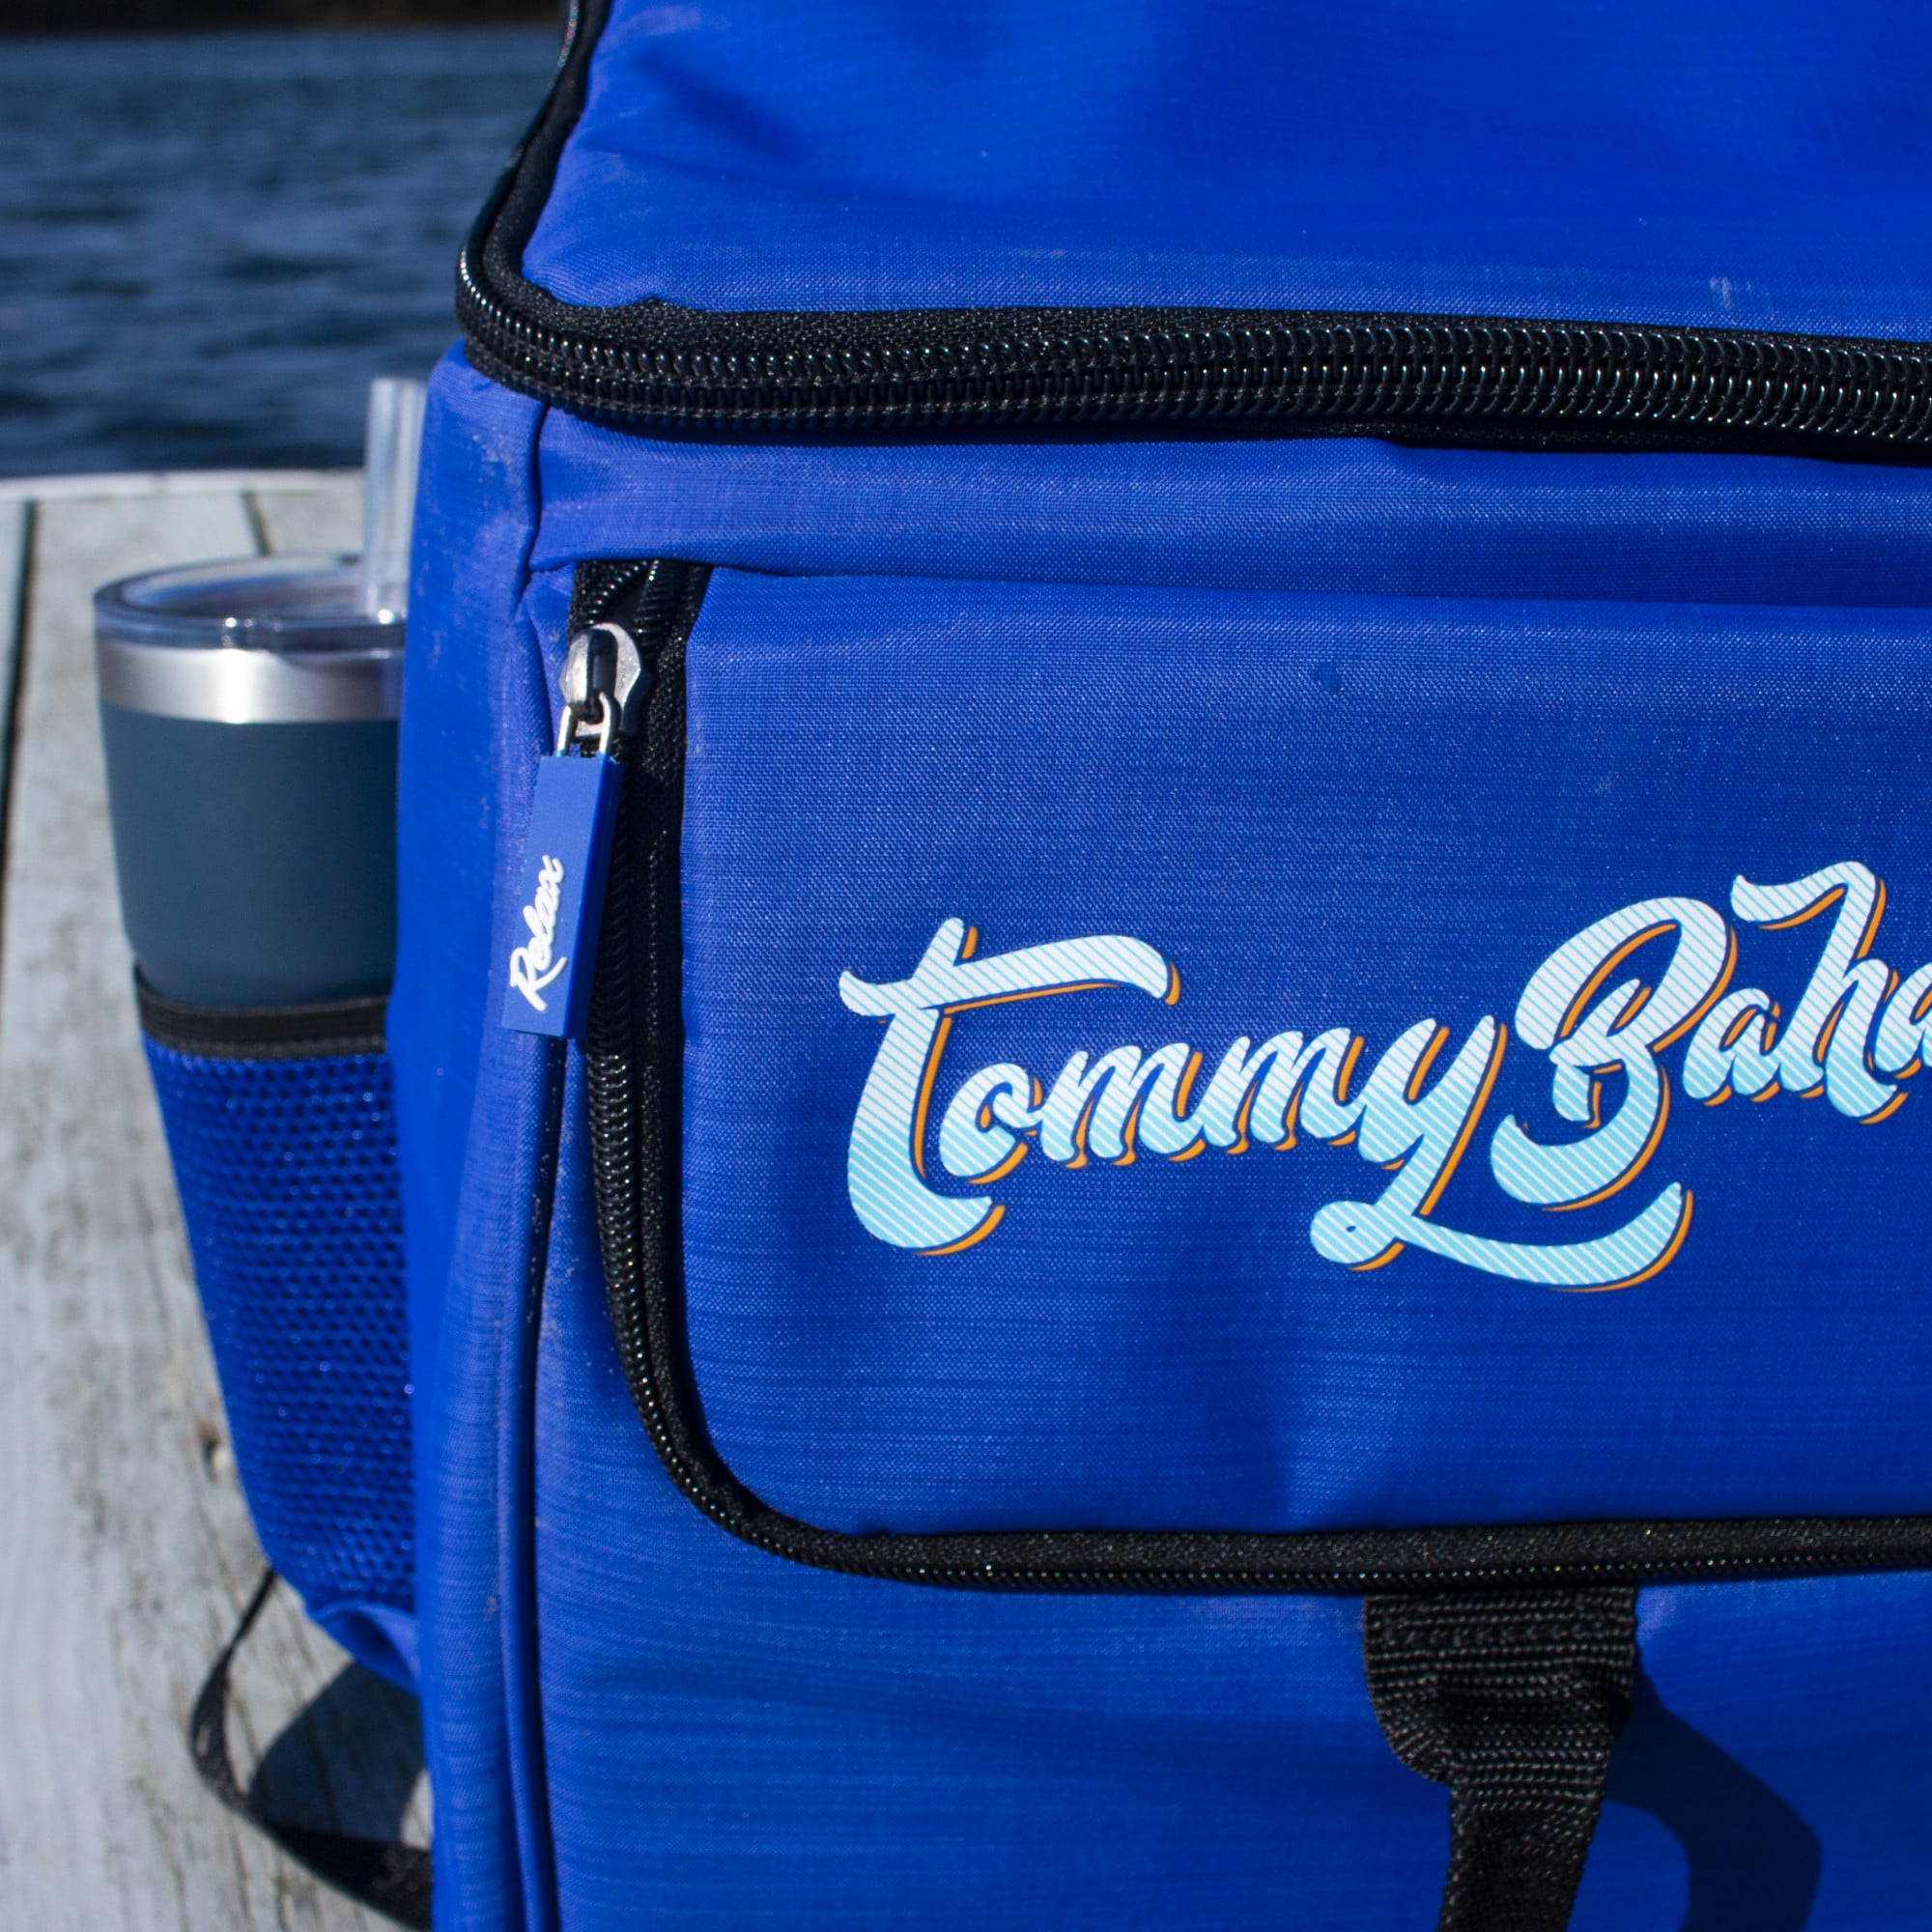 Tommy Bahama 2 Piece Set Blue 40-Quart Wheeled Insulated Backpack ...